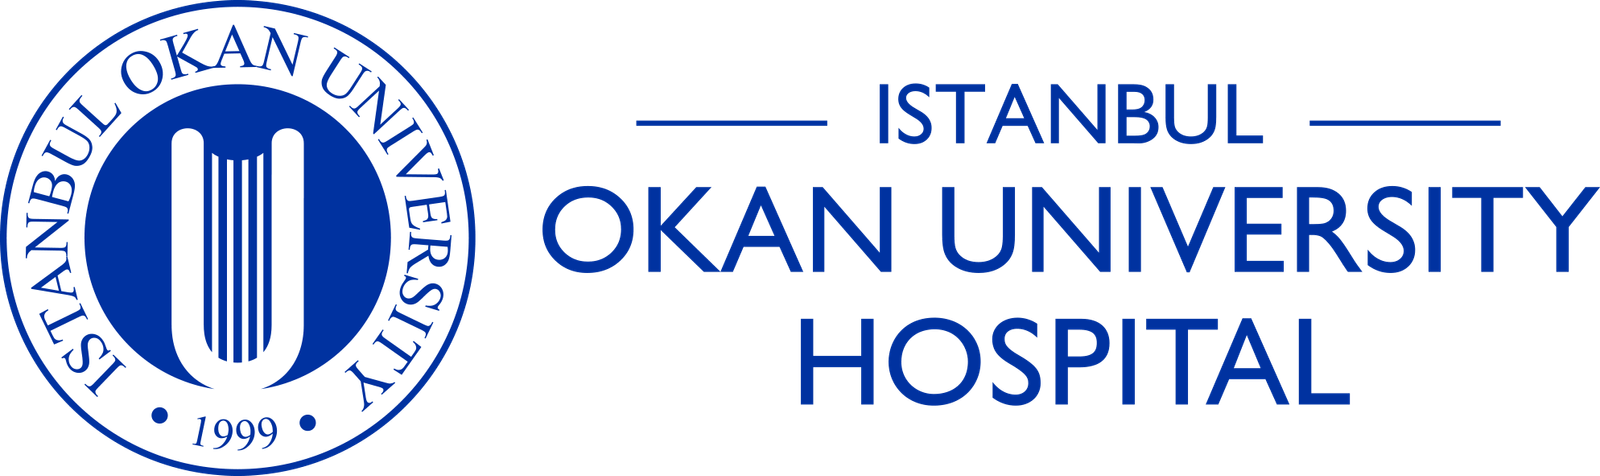 okan-hastanesi-logo-en.png